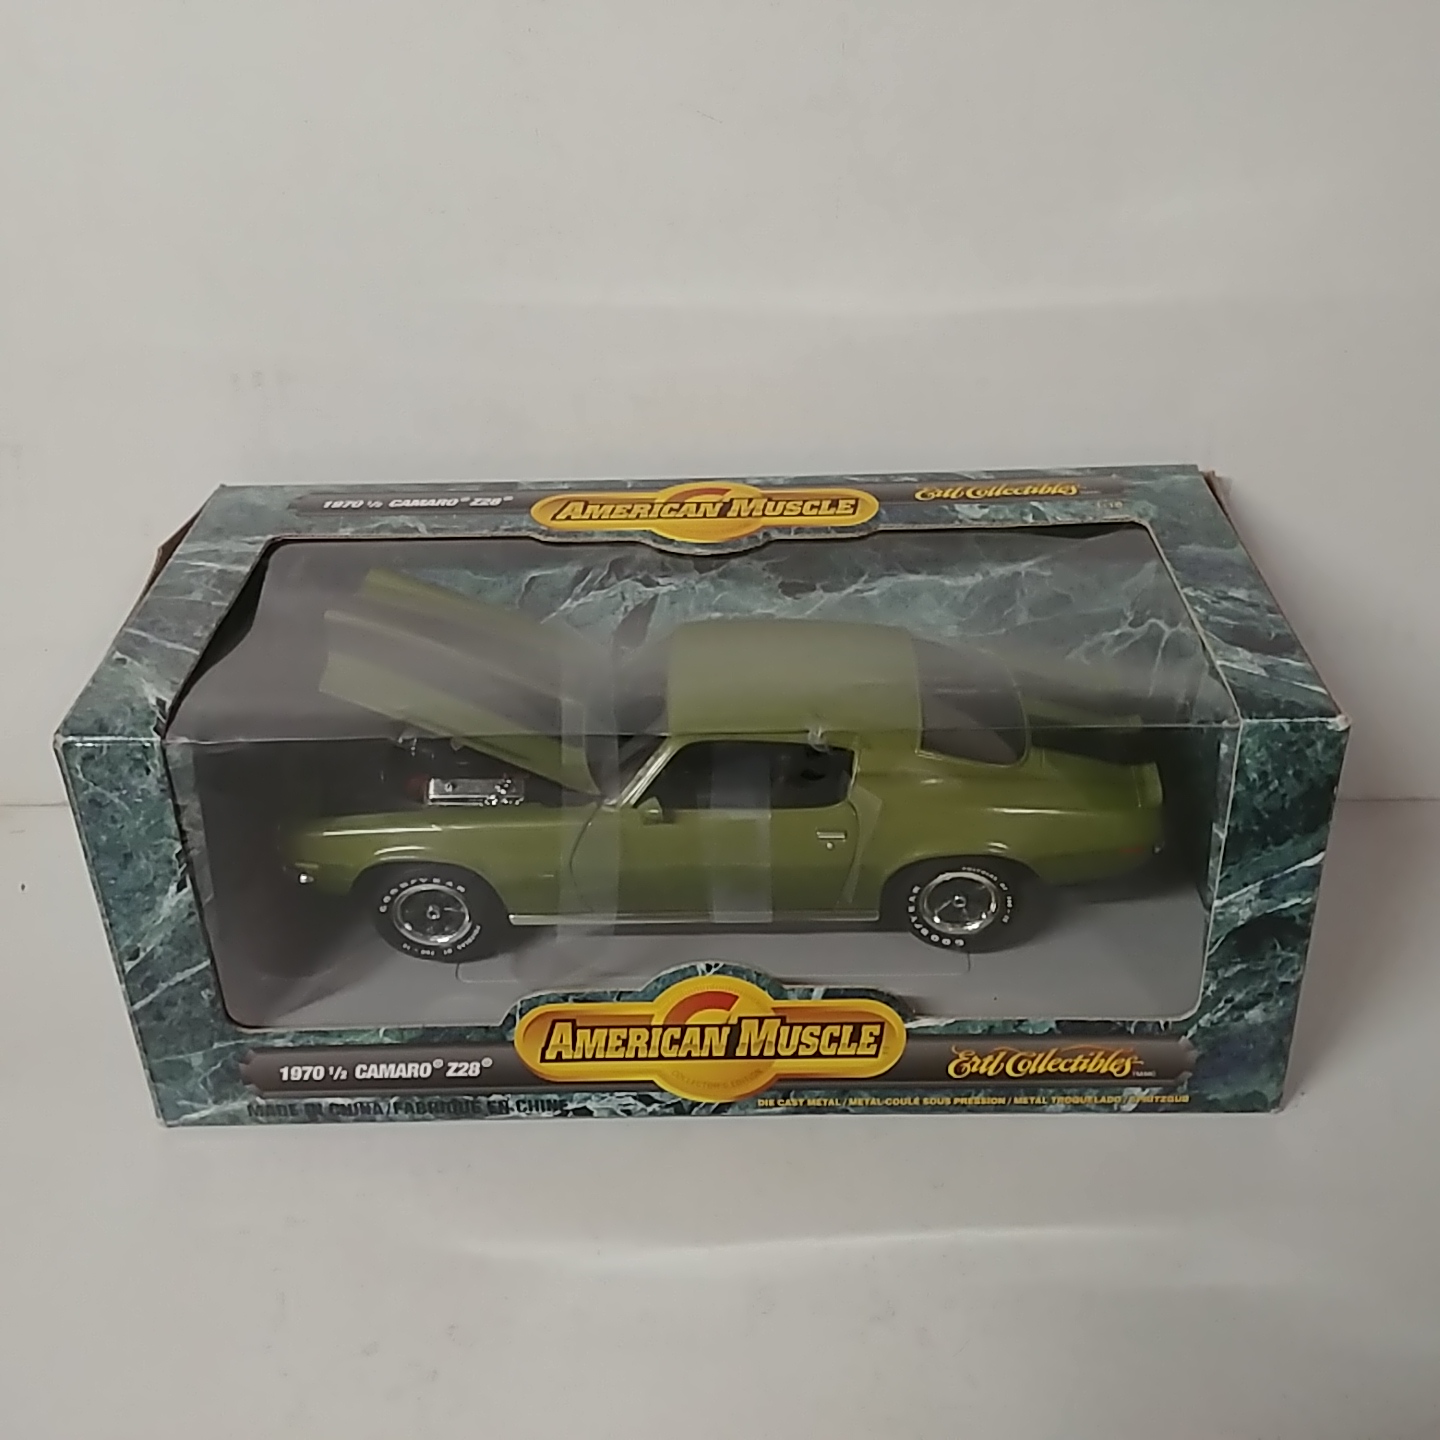 1970 1/2 Chevrolet 1/18th Camaro Z28 Green